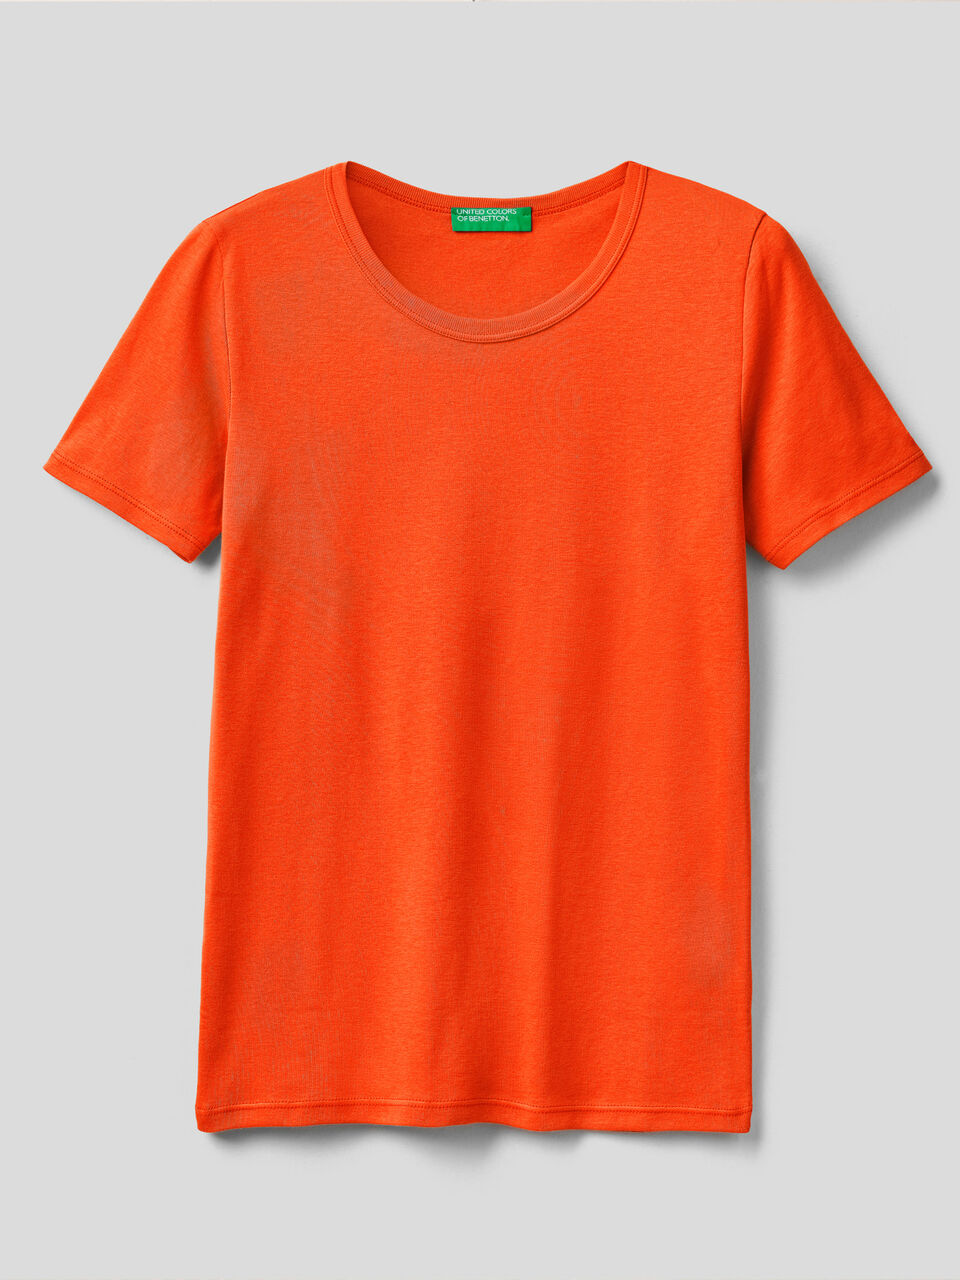 cotton fiber - Long t-shirt Benetton | Orange